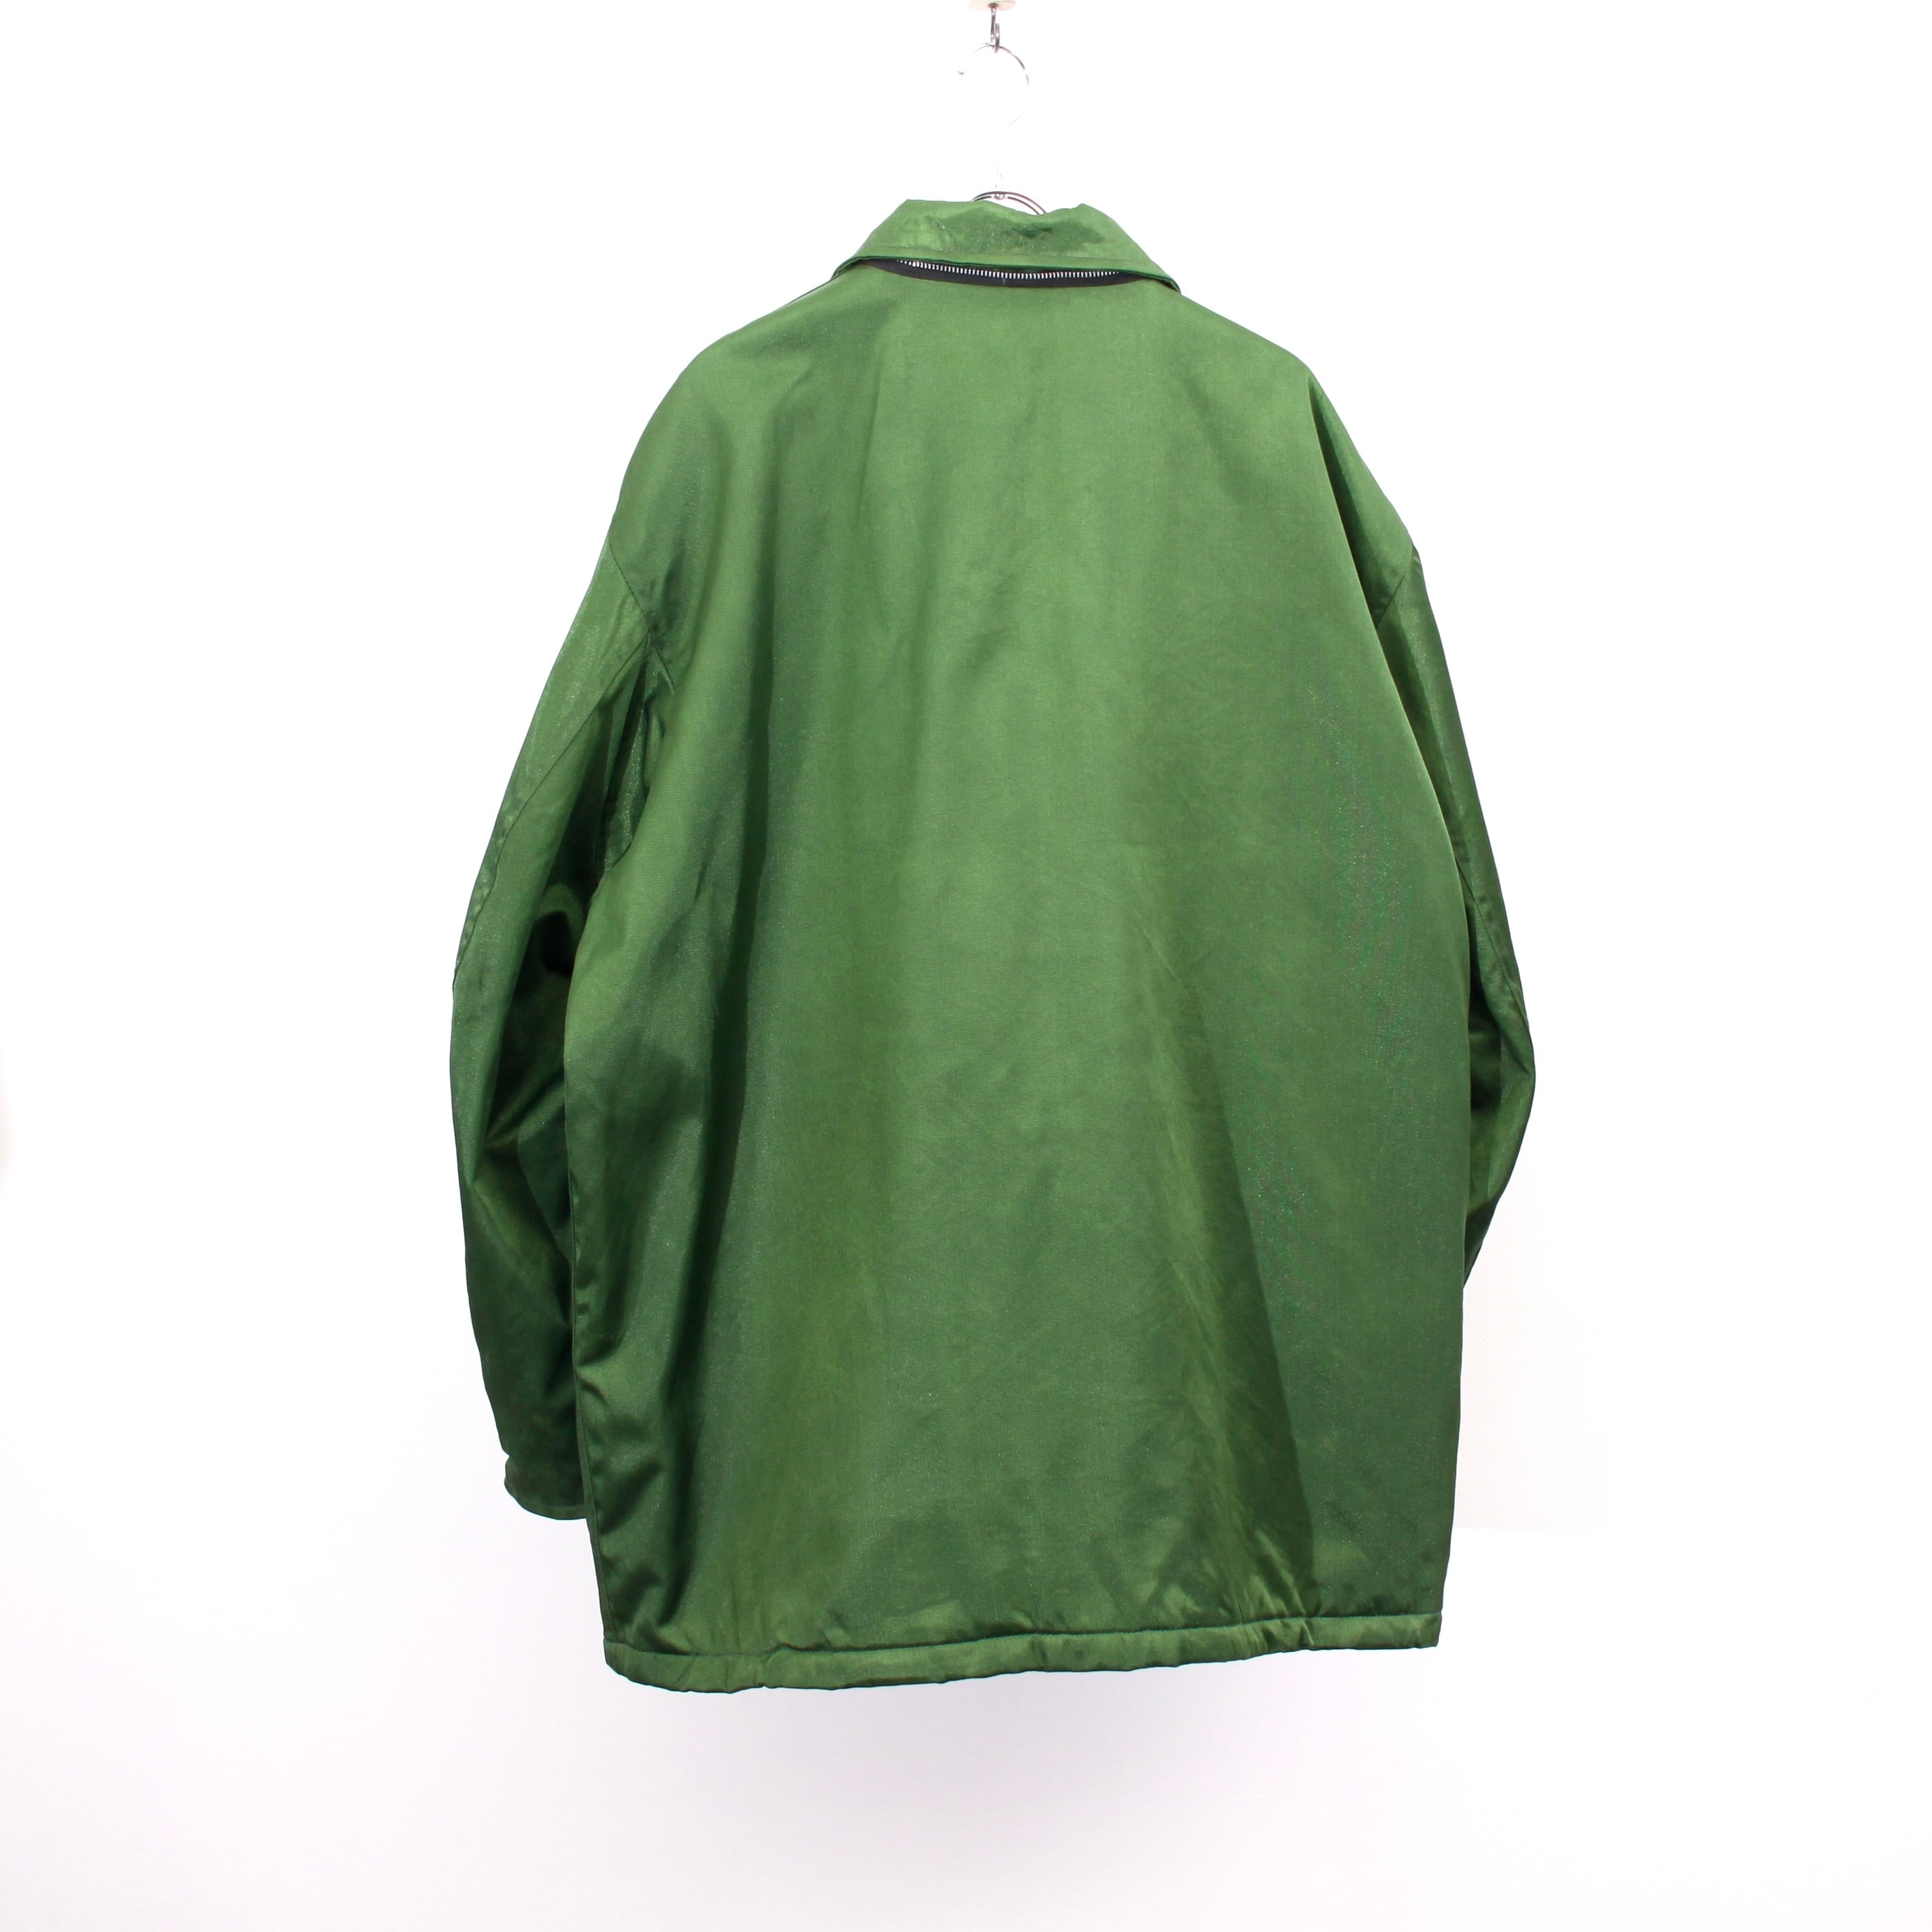 1196. 1990's Spiewak Titan cloth B-9 flight jacket Made in USA 90s